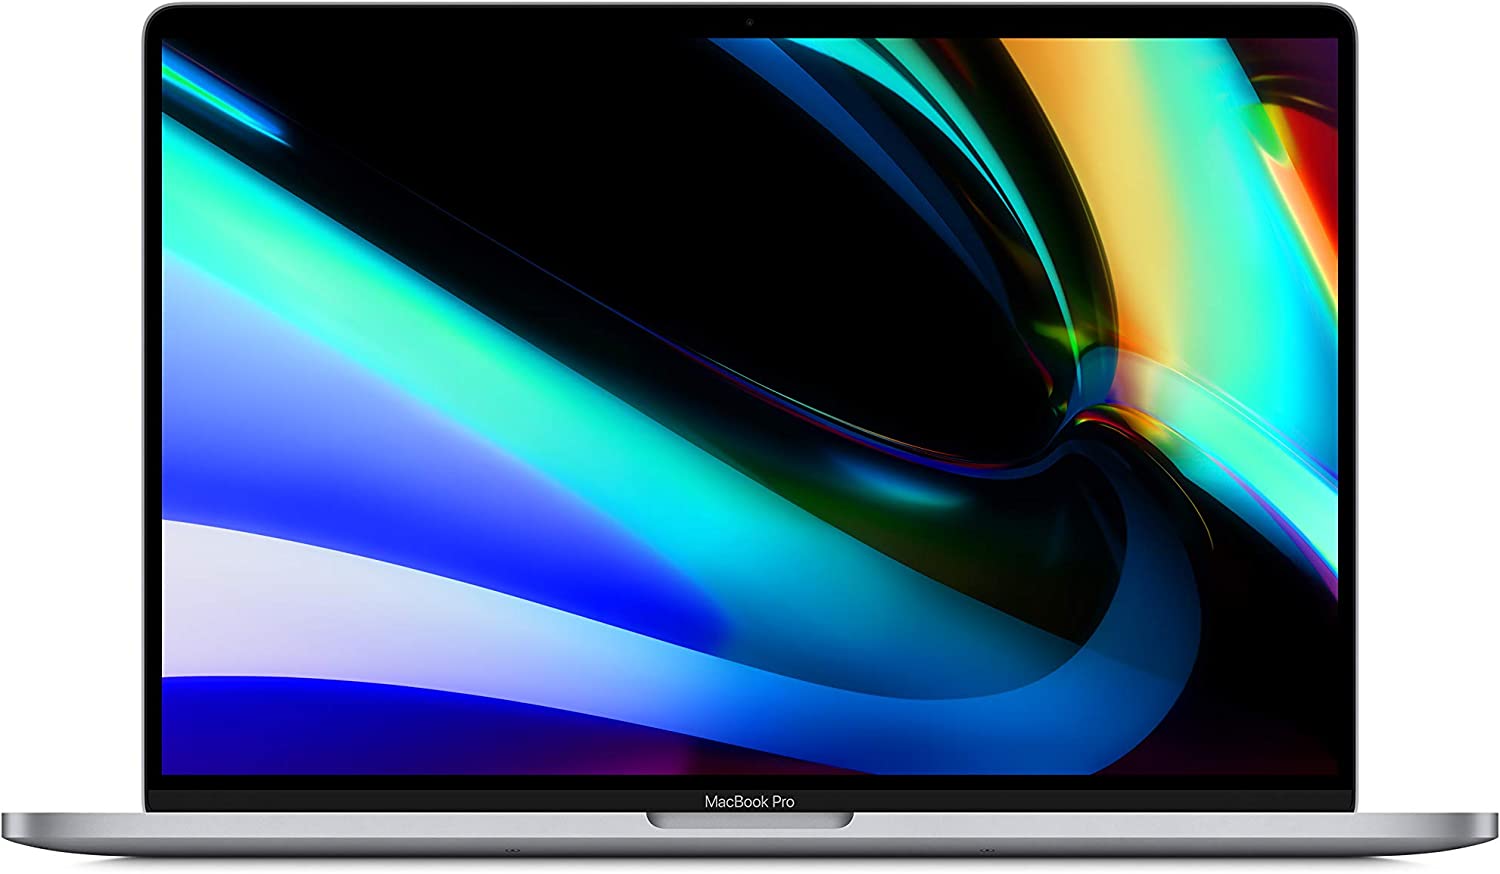 Apple MacBook Pro 16.1 (A2141) 2019 16" inches 2.6GHz, Intel Core i7, 16GB RAM, 512GB SSD,1.5GB VRAM, 4 GB graphic card (Renewed)